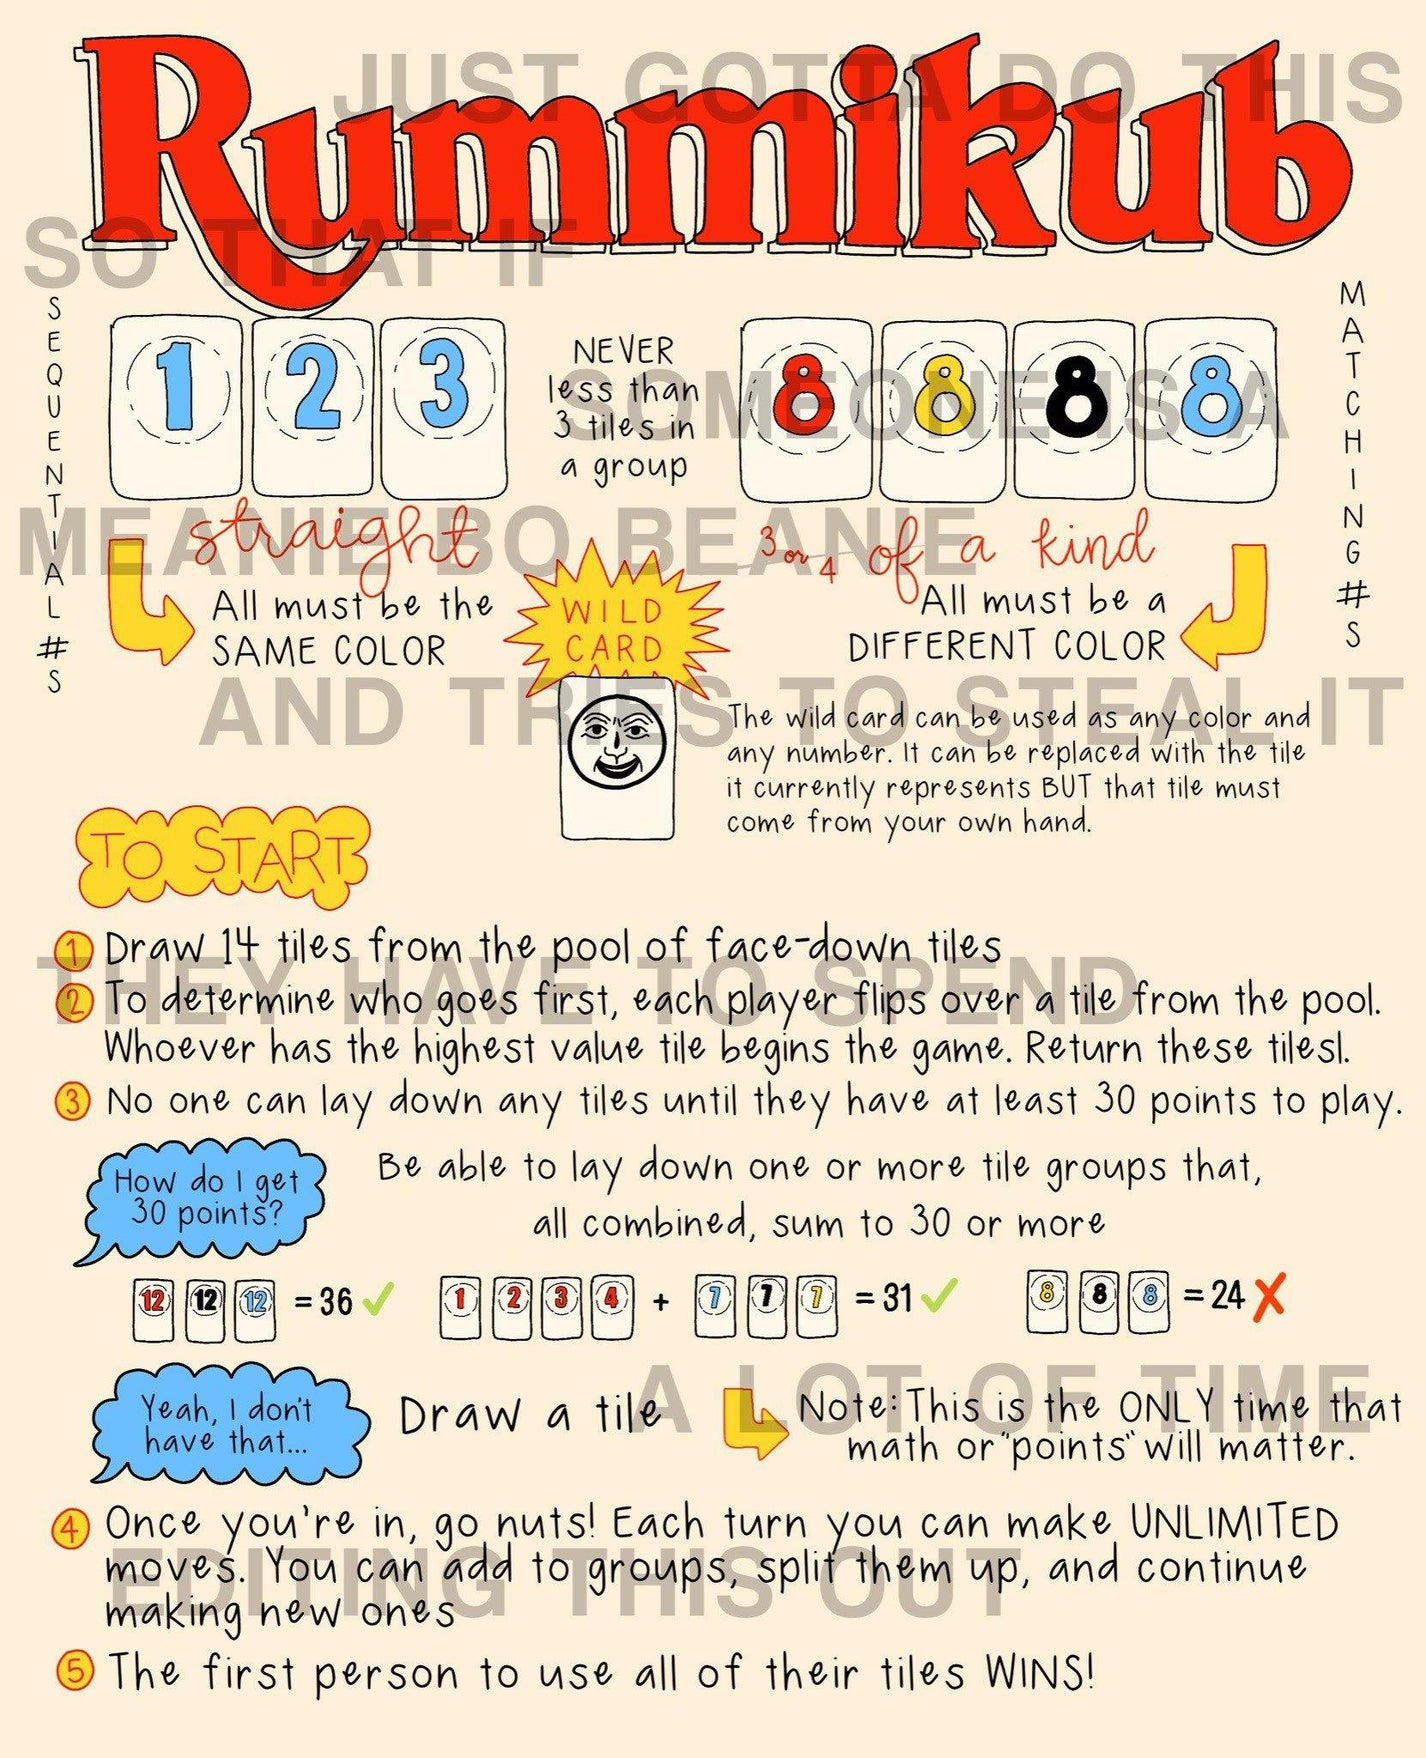 travel rummikub instructions